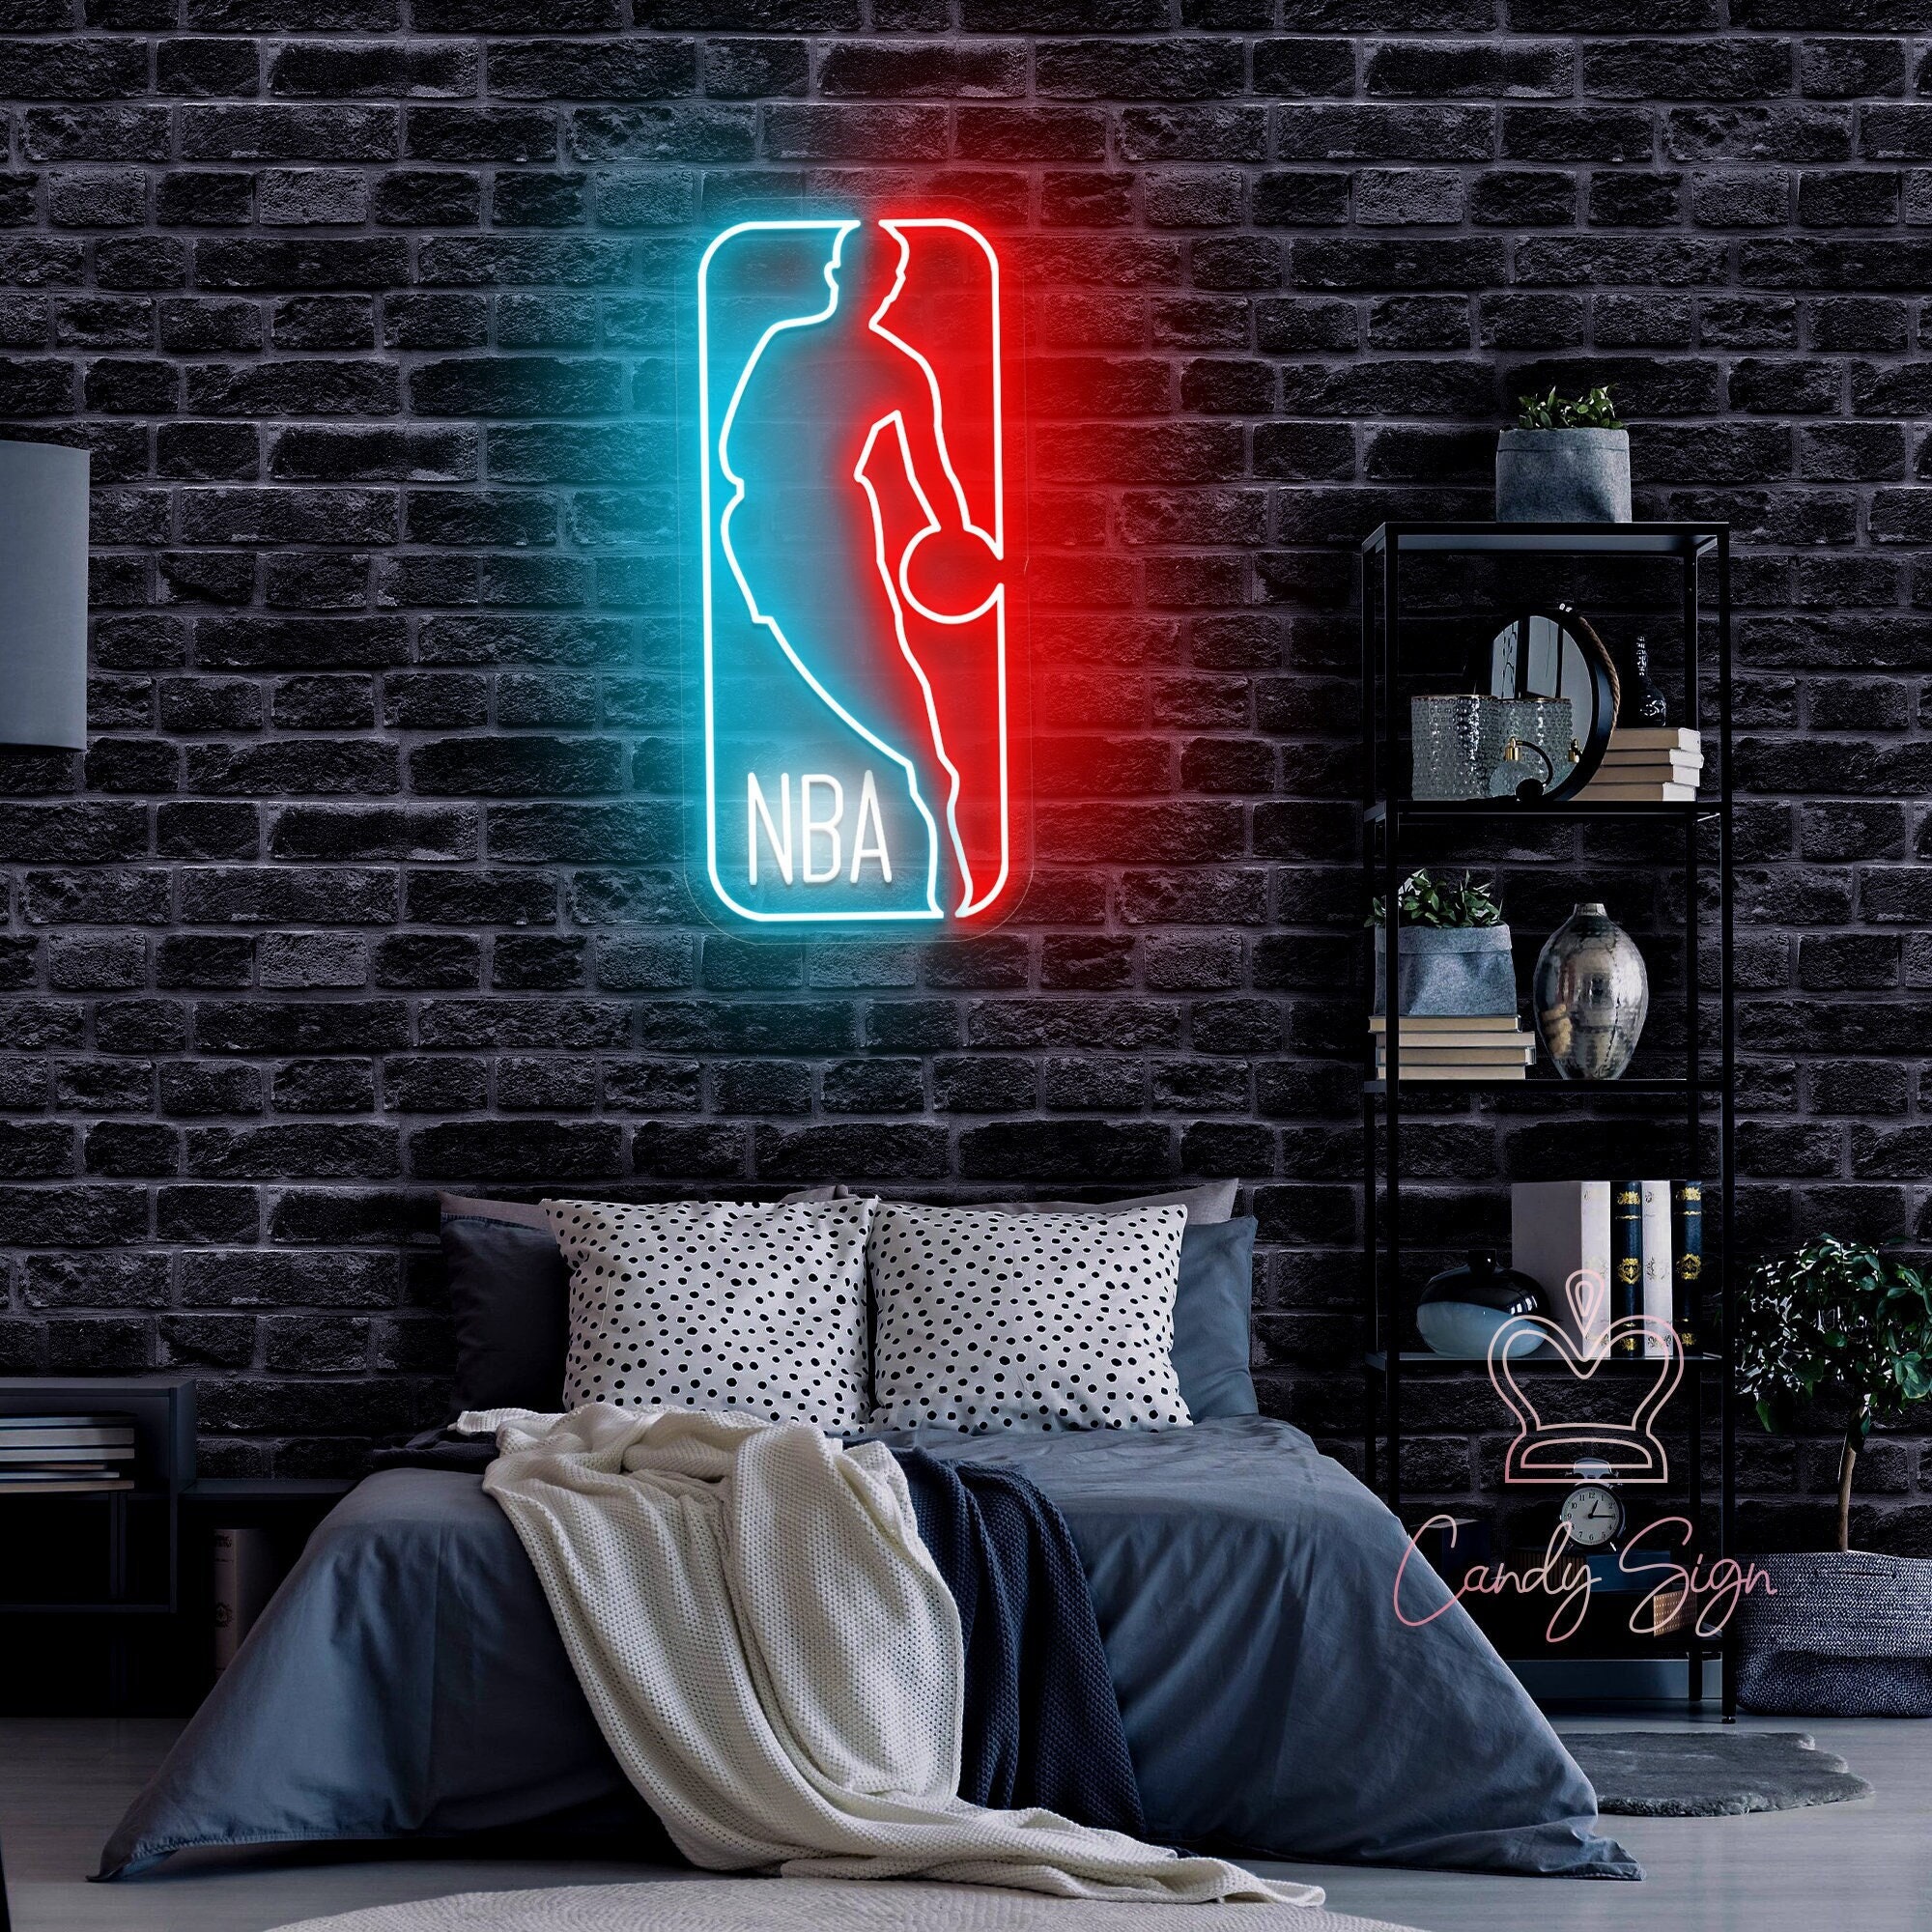 12. NBA Neon Sign